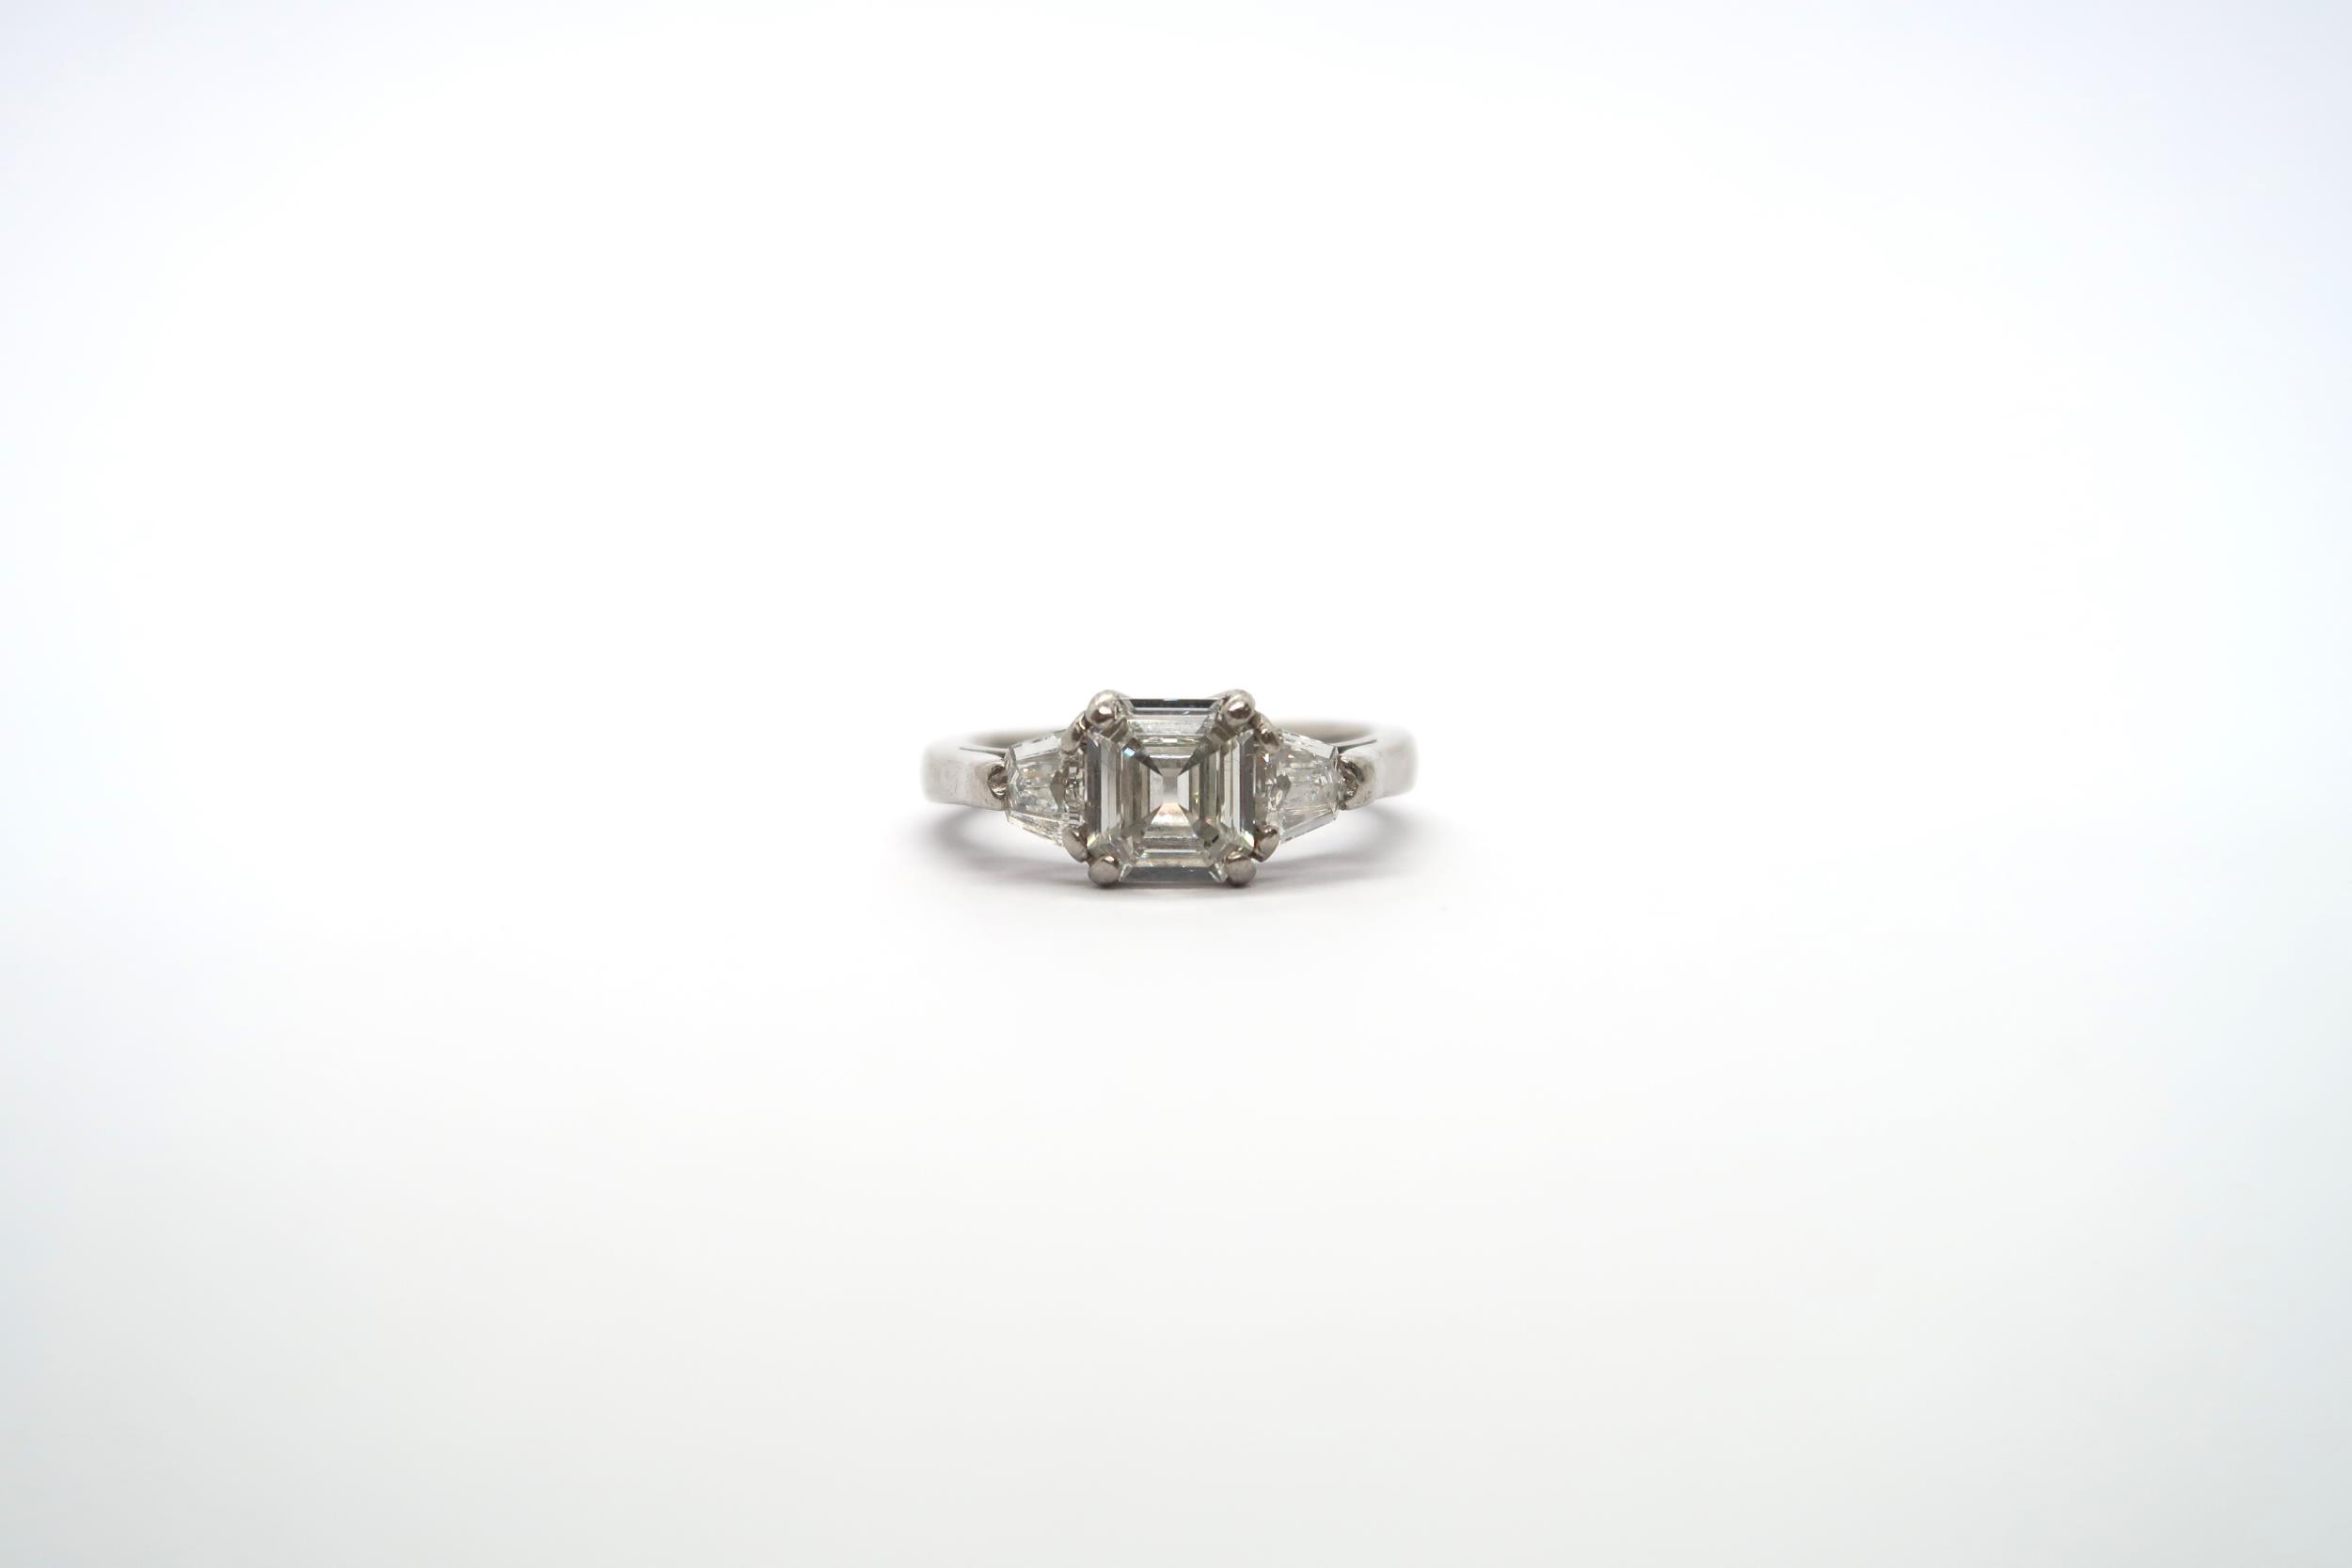 A very good platinum three stone diamond ring - The square emerald cut diamond estimated 1.1ct - Image 9 of 11